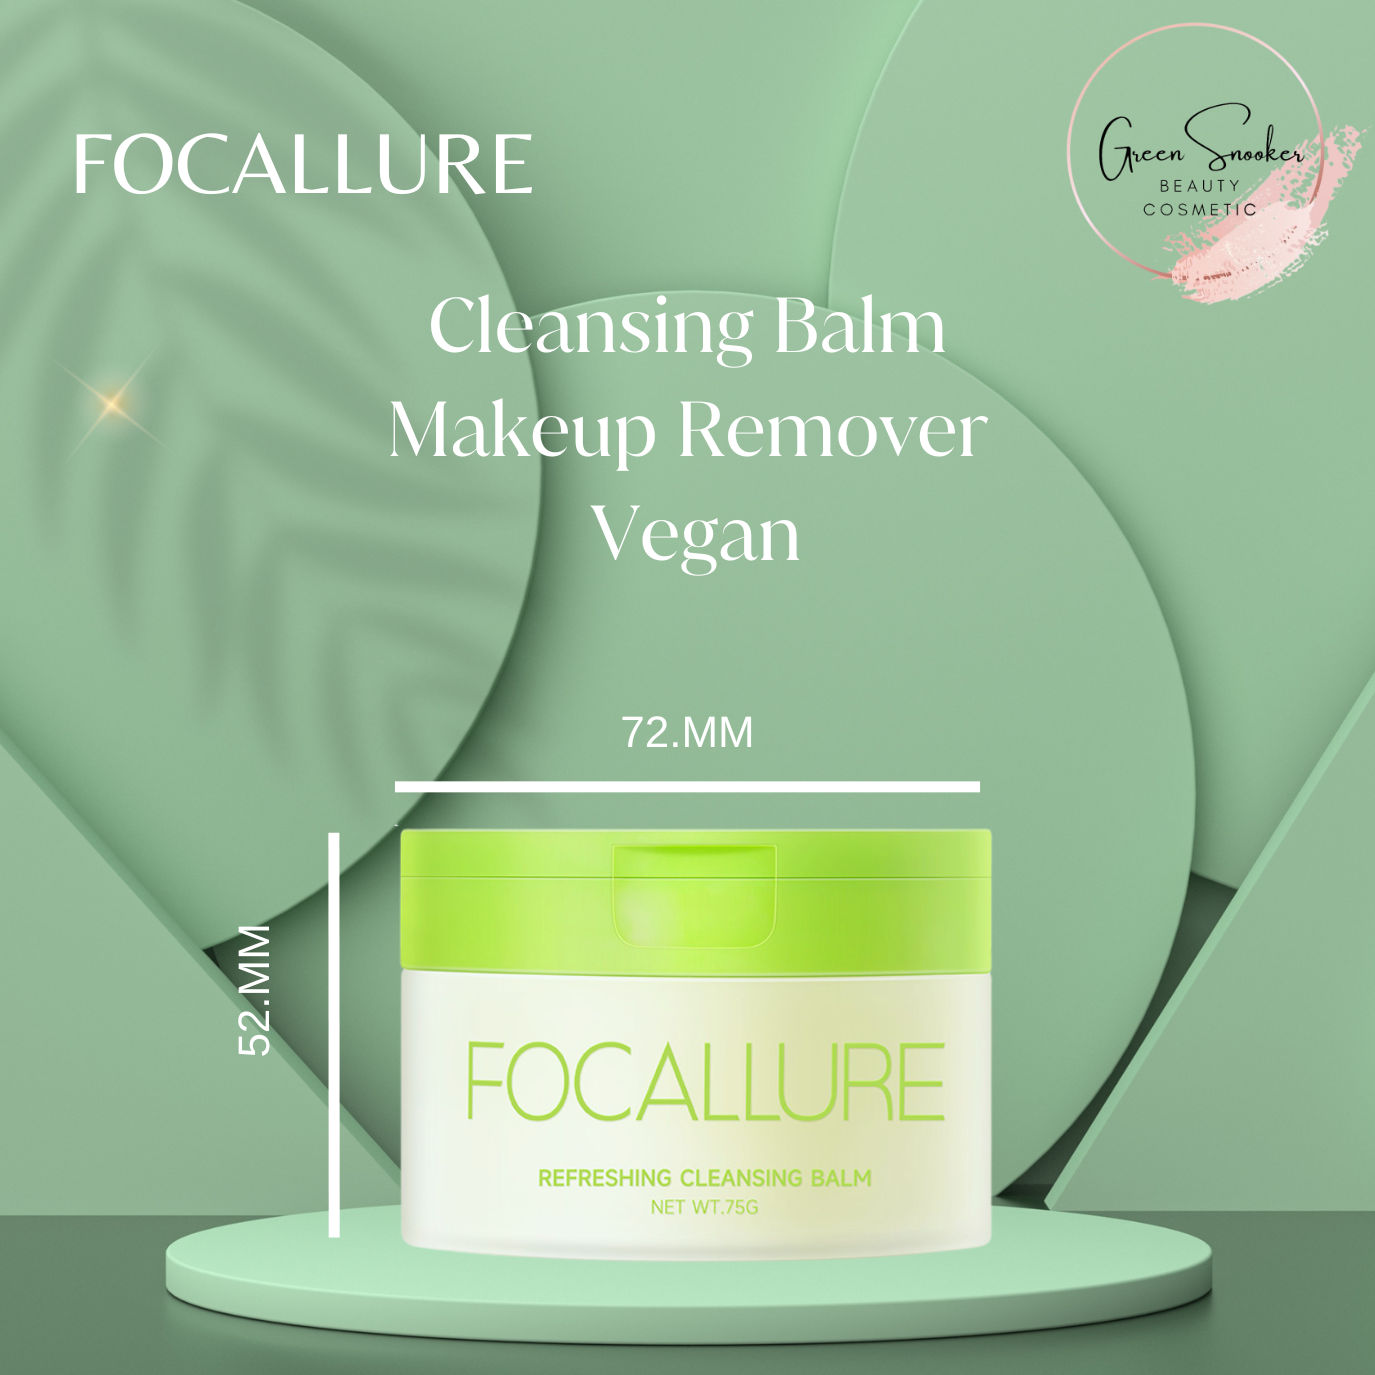 Focallure, Cleansing balm makeup remover, Vegan